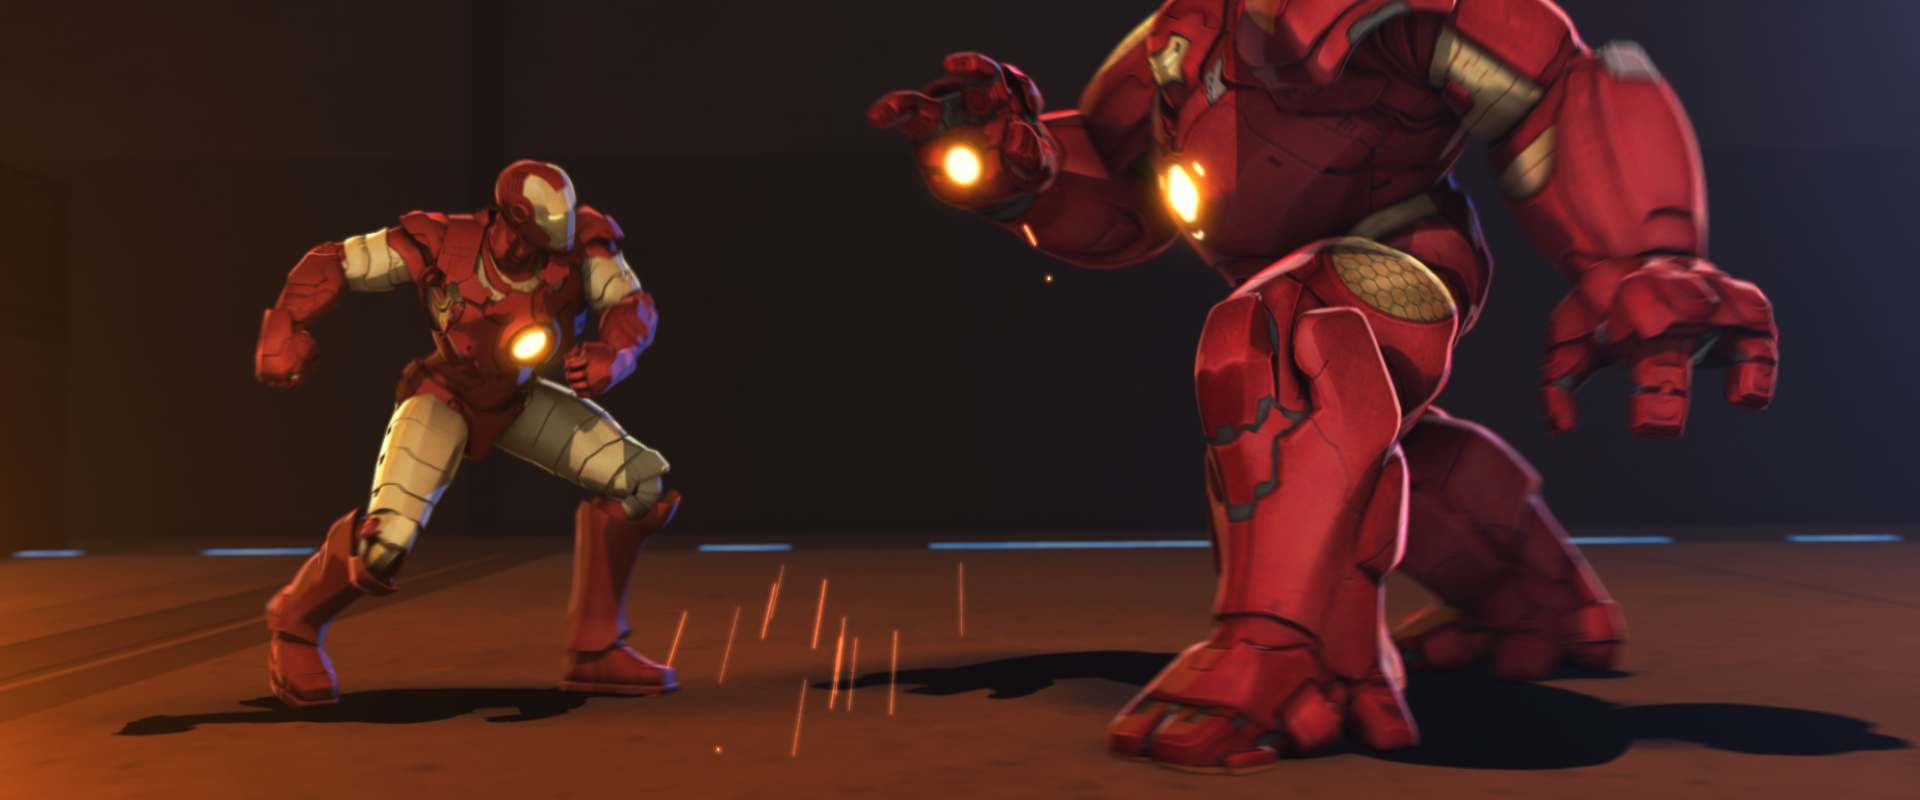 Iron Man & Hulk: Heroes United background 2